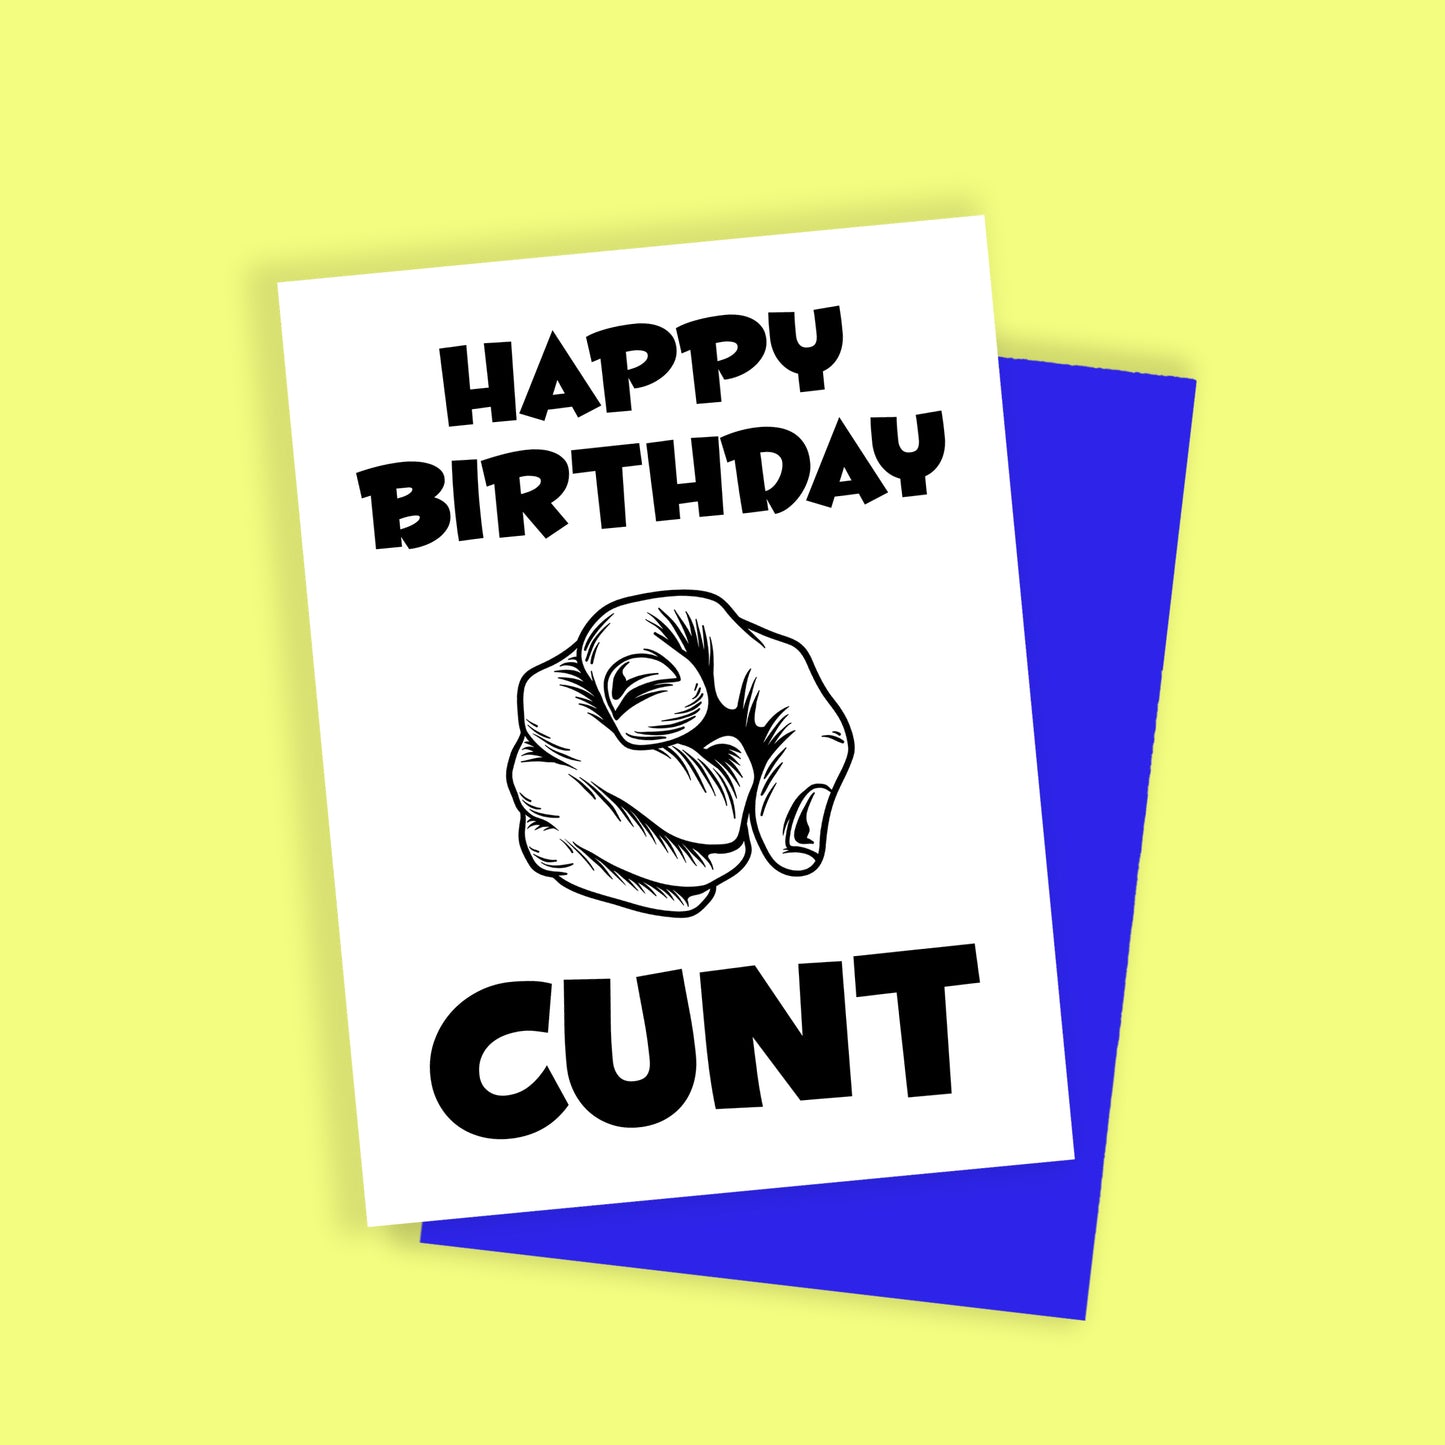 Happy birthday you cunt